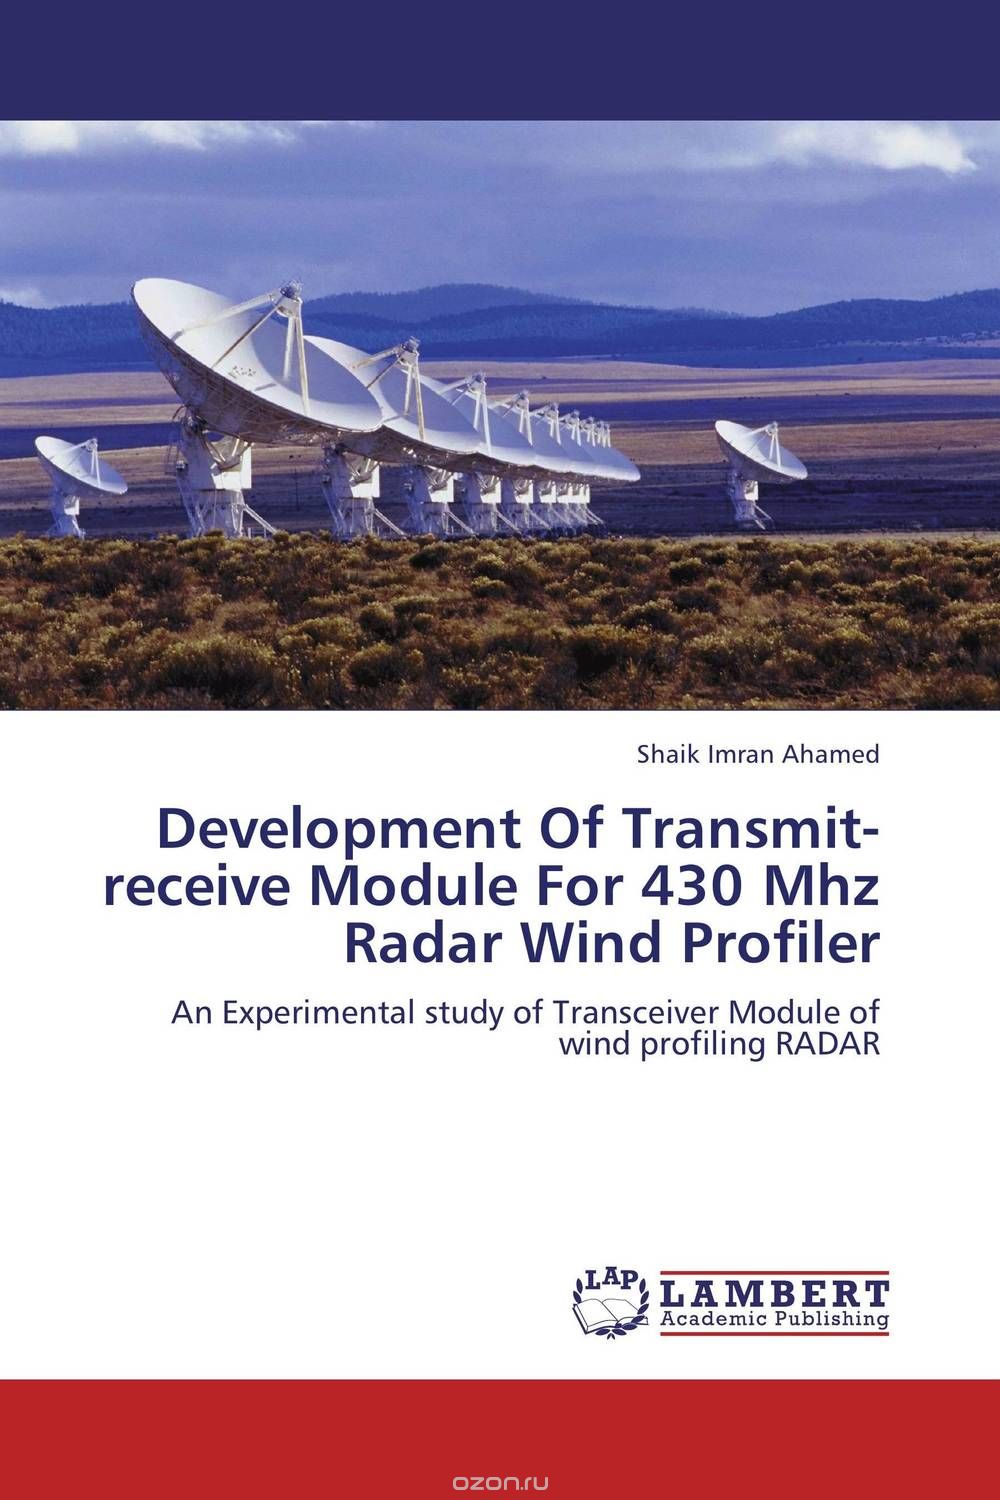 Скачать книгу "Development Of Transmit-receive Module For 430 Mhz Radar Wind Profiler"